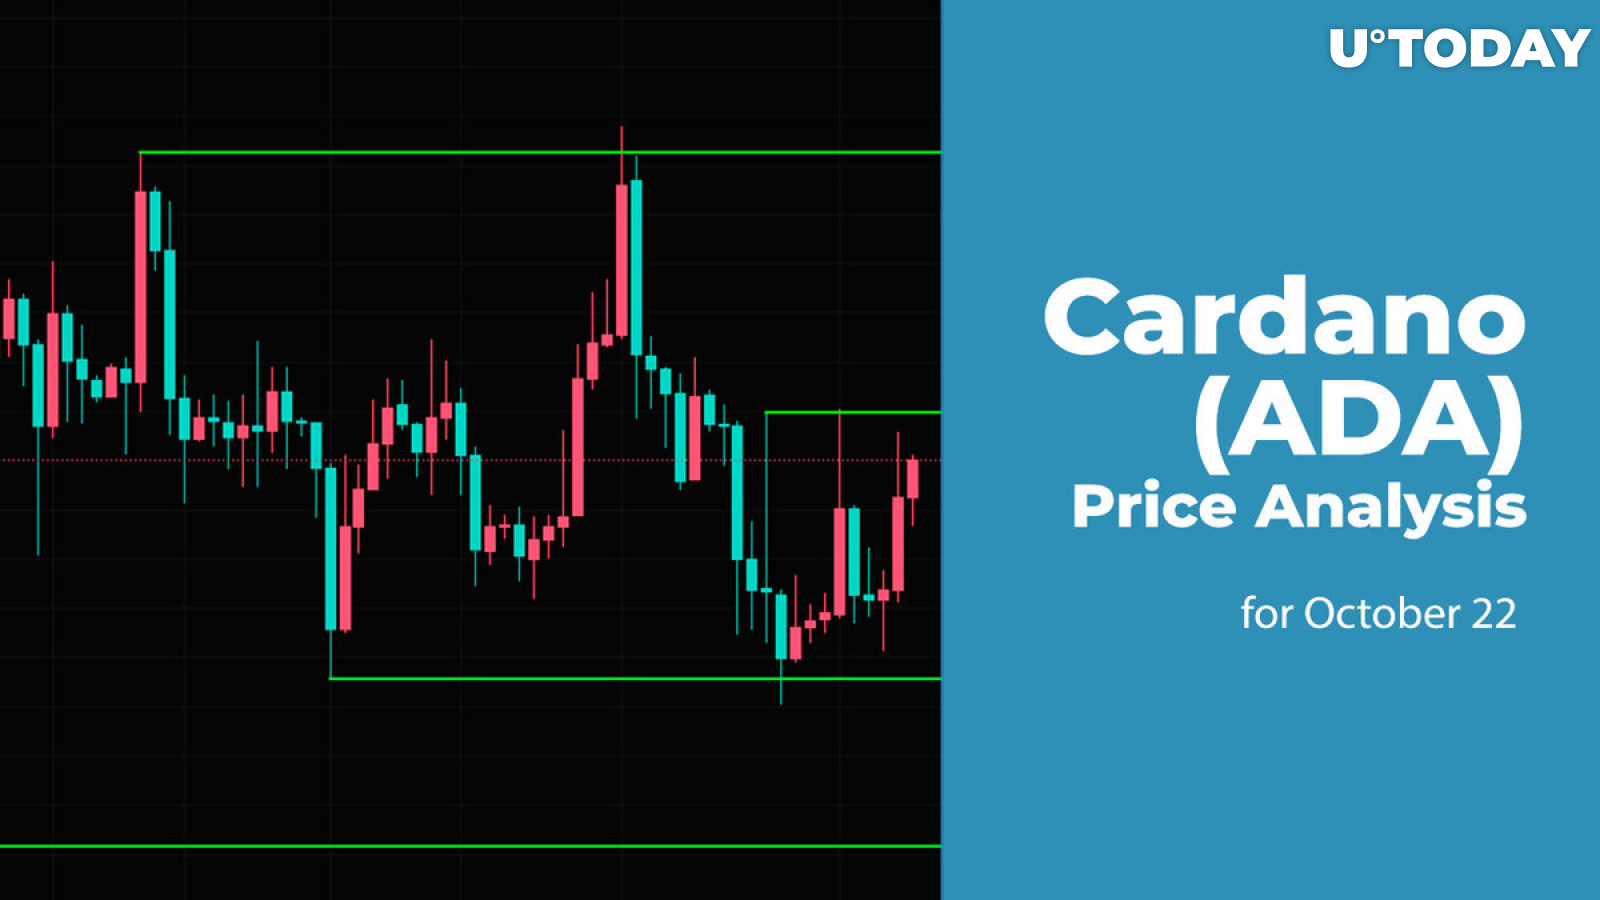 Cardano (ADA) Price Analysis for October 22